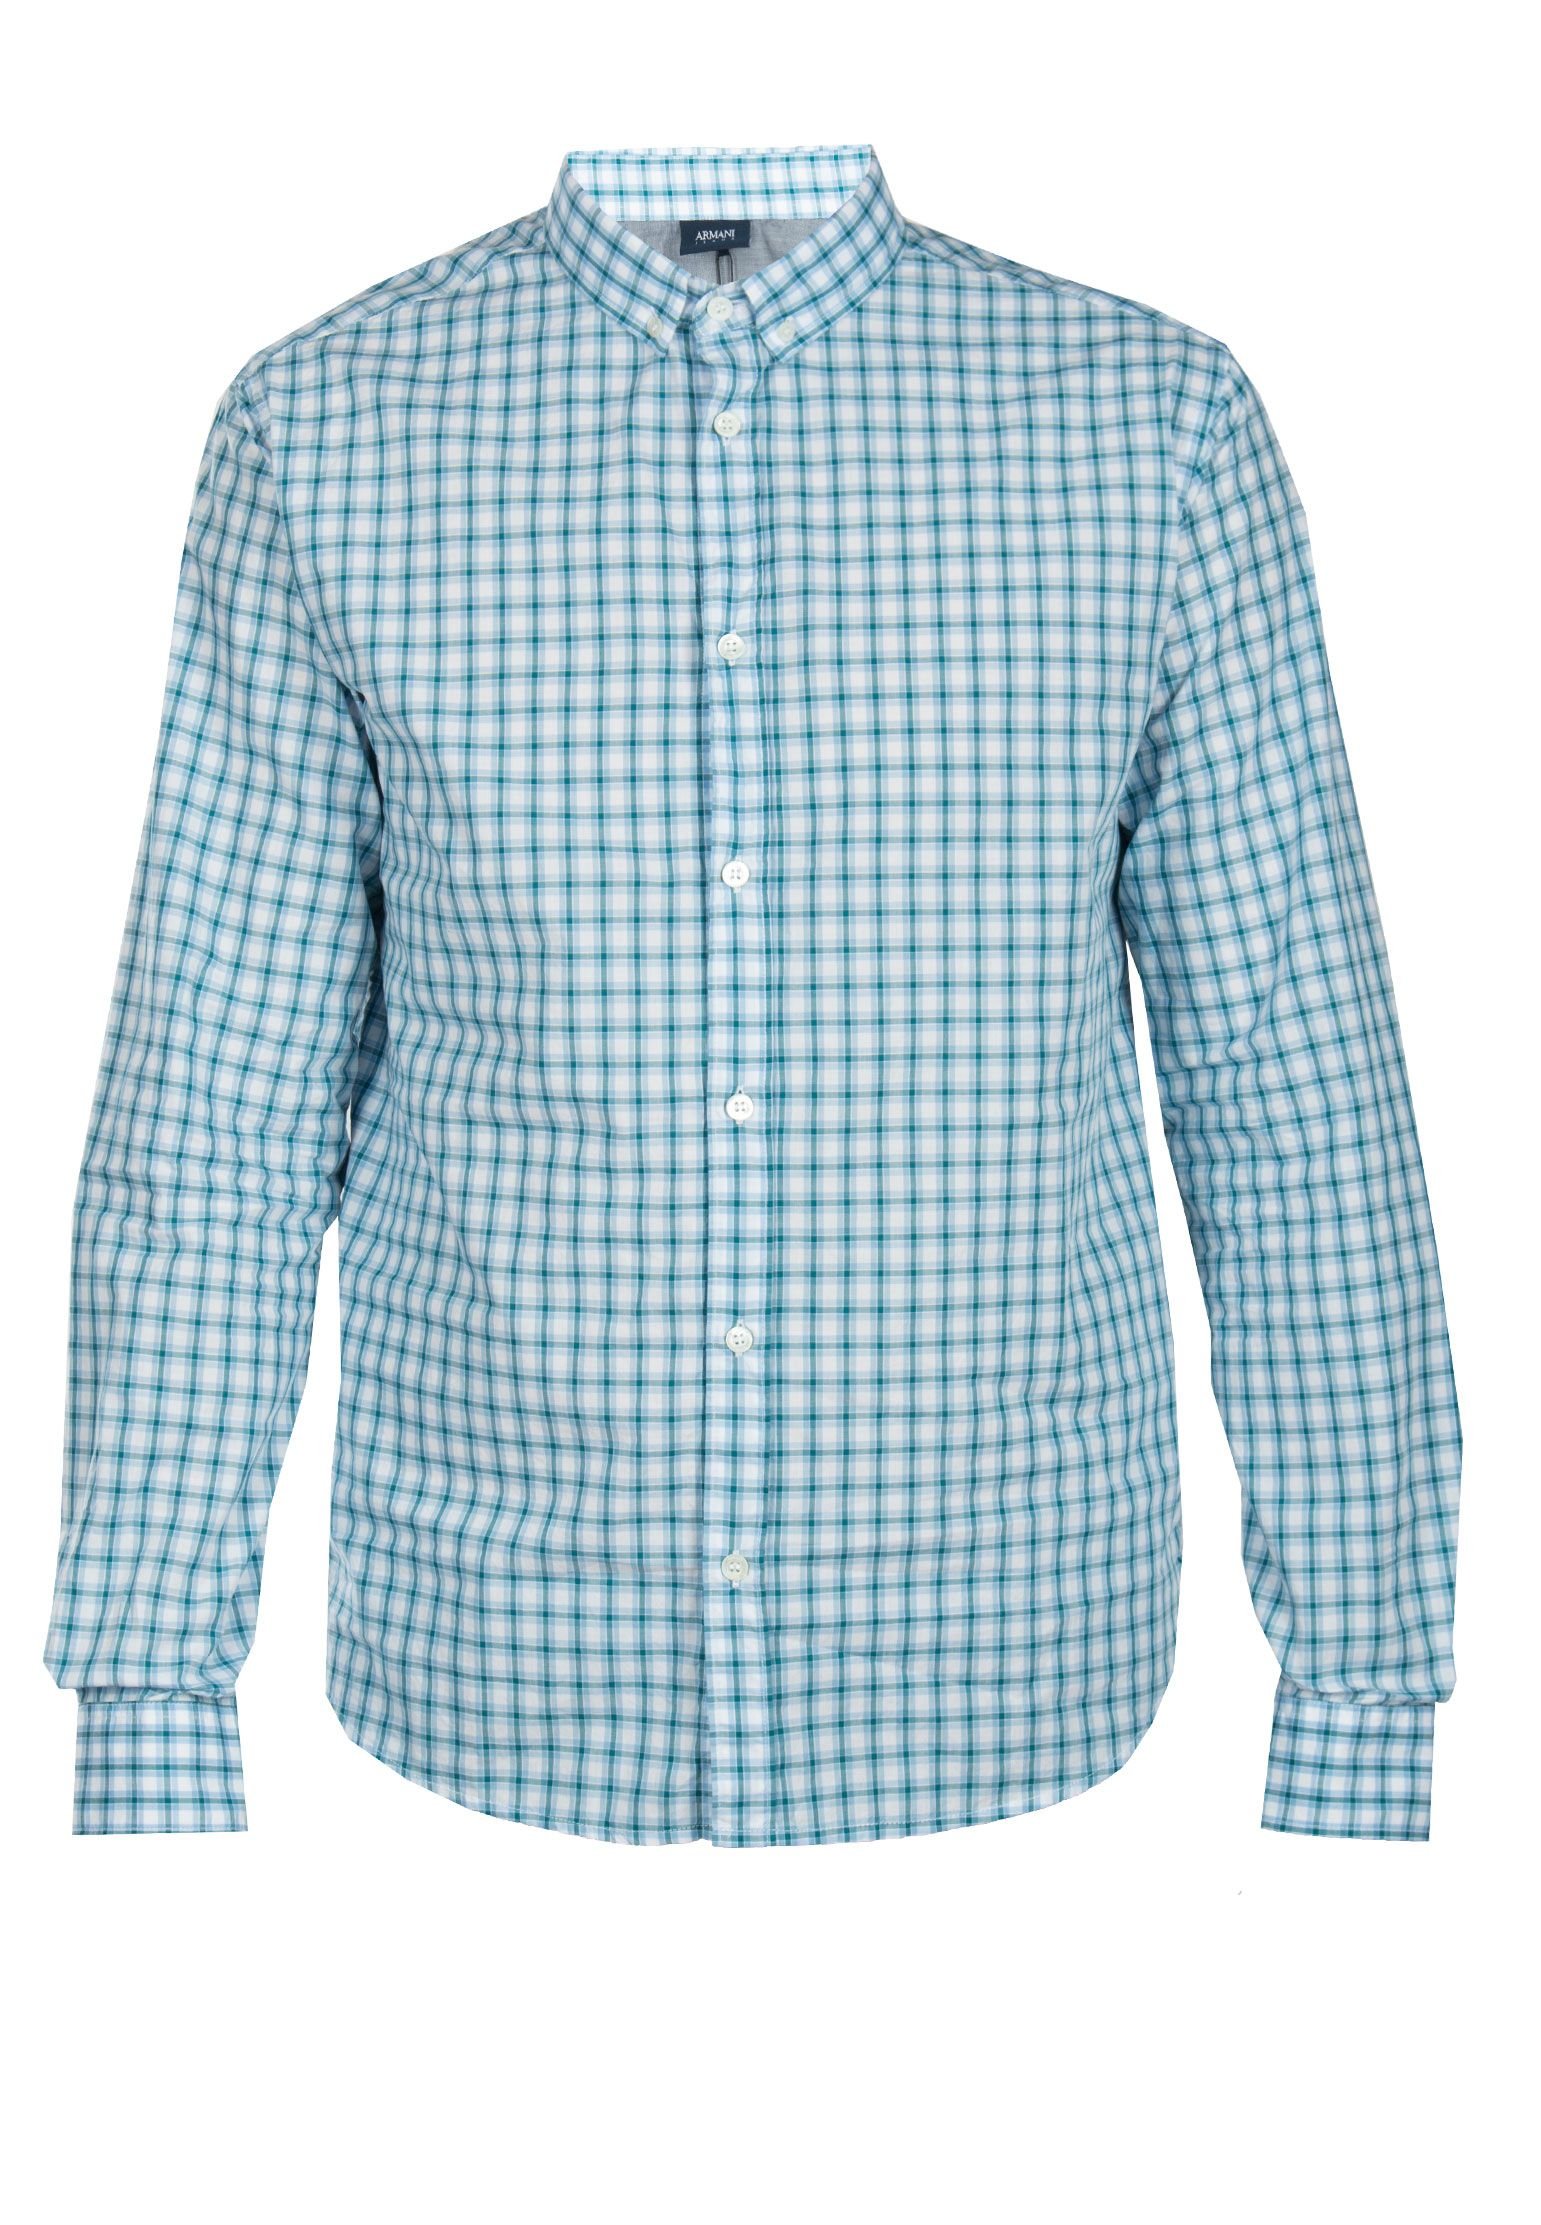 Рубашка мужская Armani Jeans 87771 голубая XL